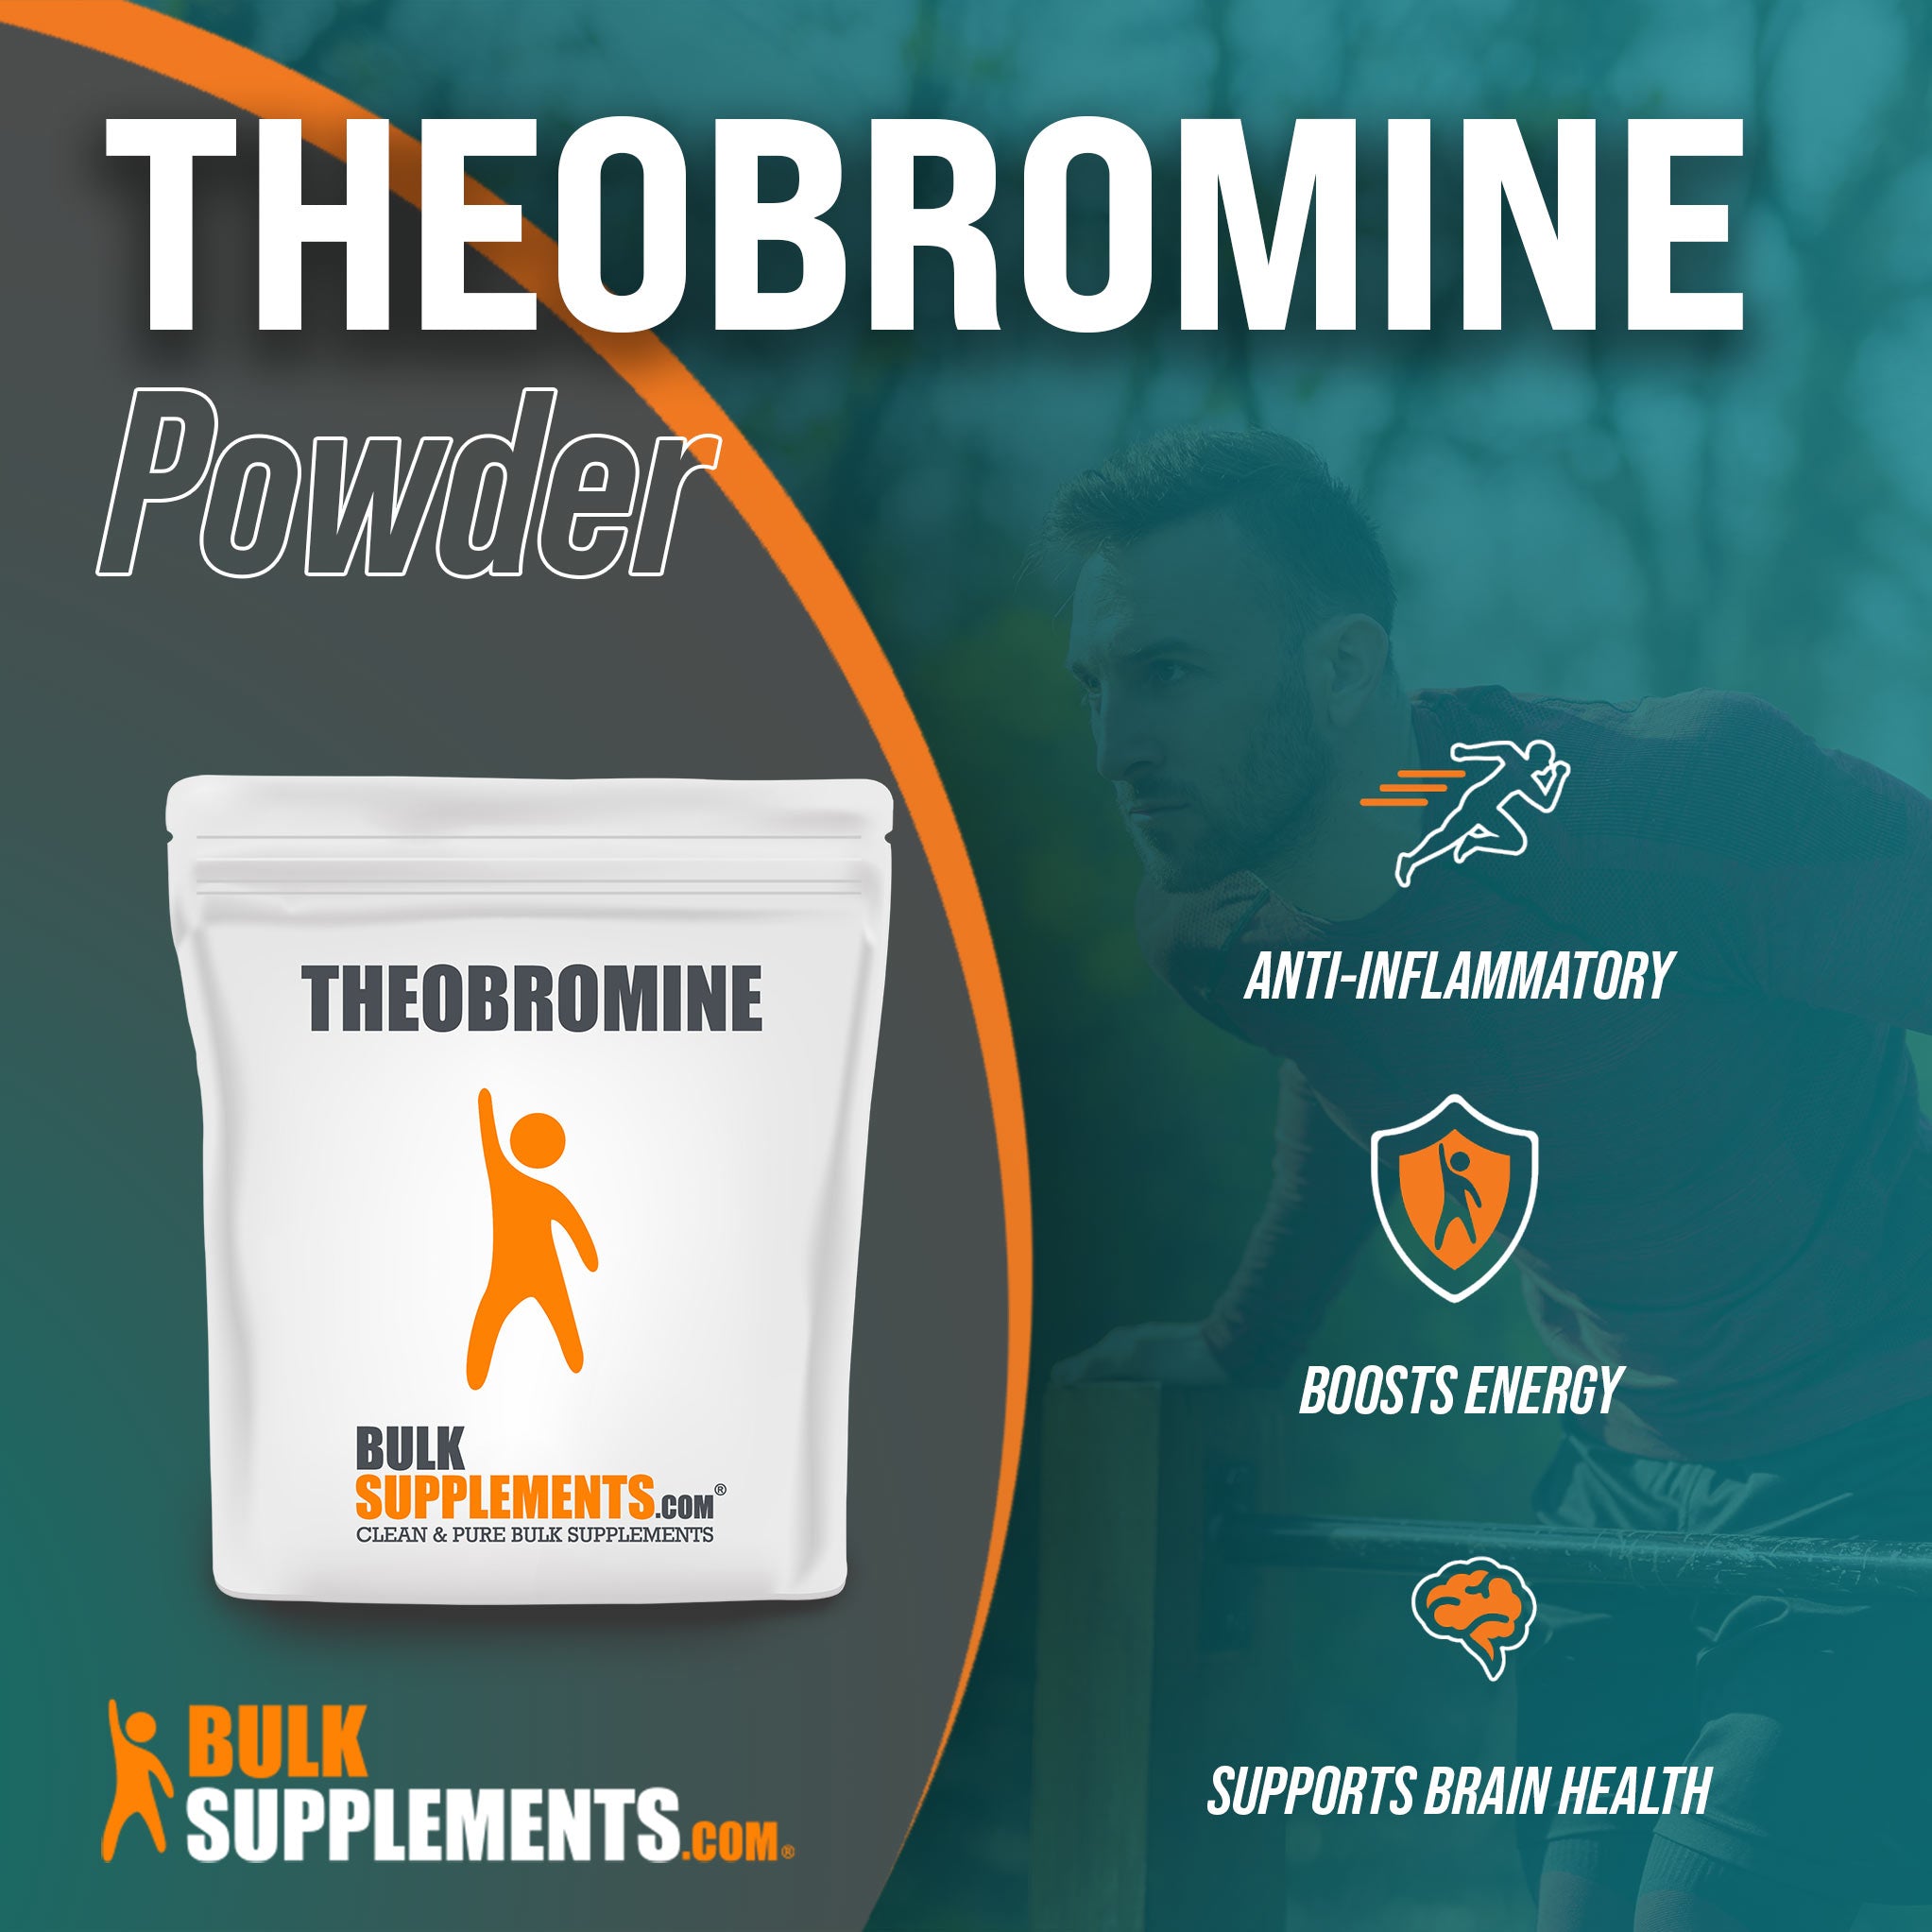 Benefits of Theobromine: anti-inflammatory, boosts energy, supports brain health